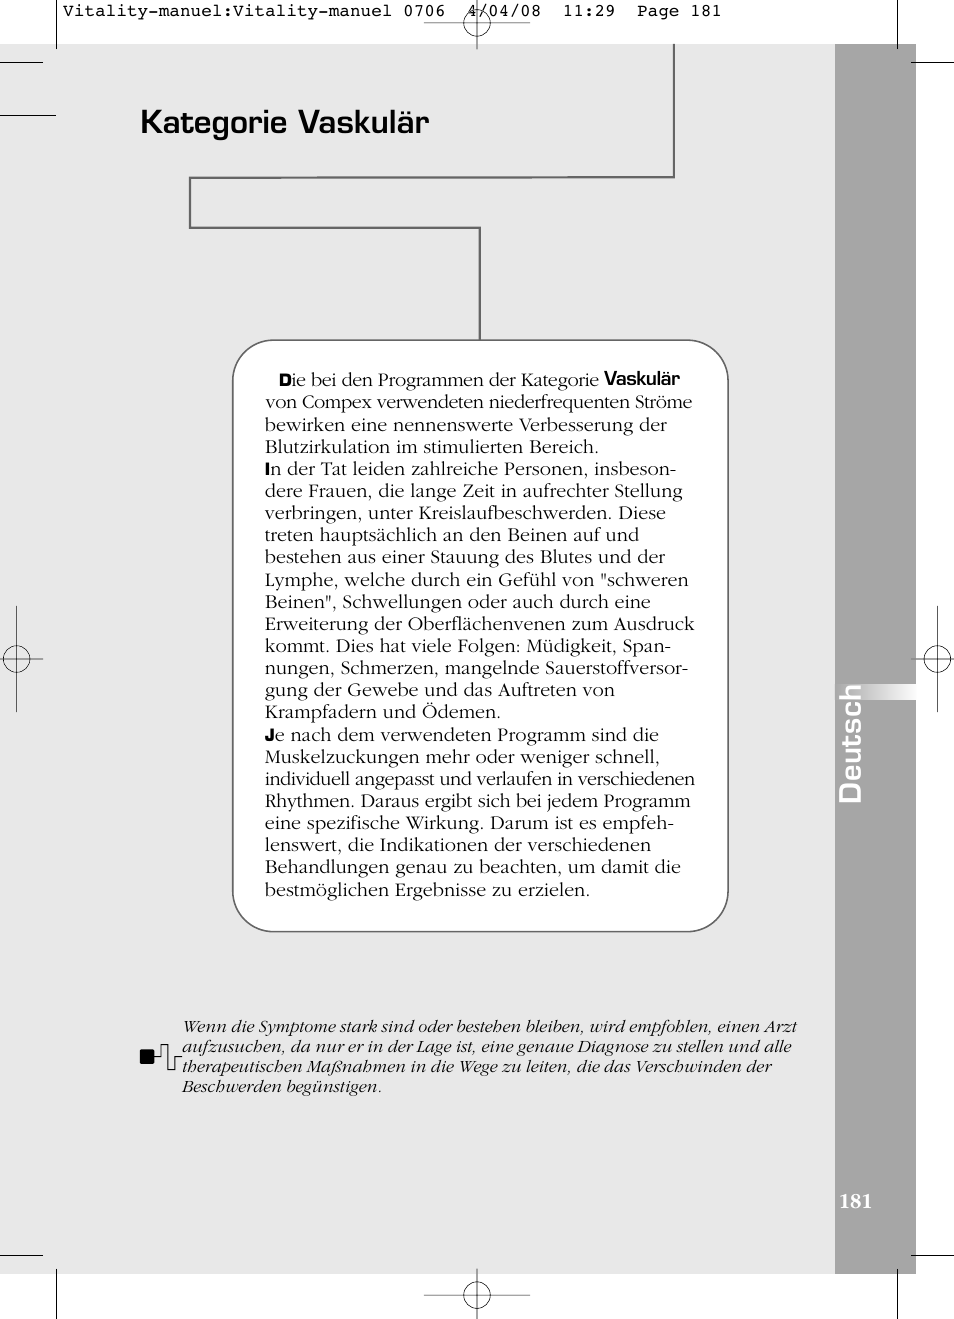 Kategorie vaskulär, Deutsch | Compex Vitality User Manual | Page 181 / 308  | Original mode